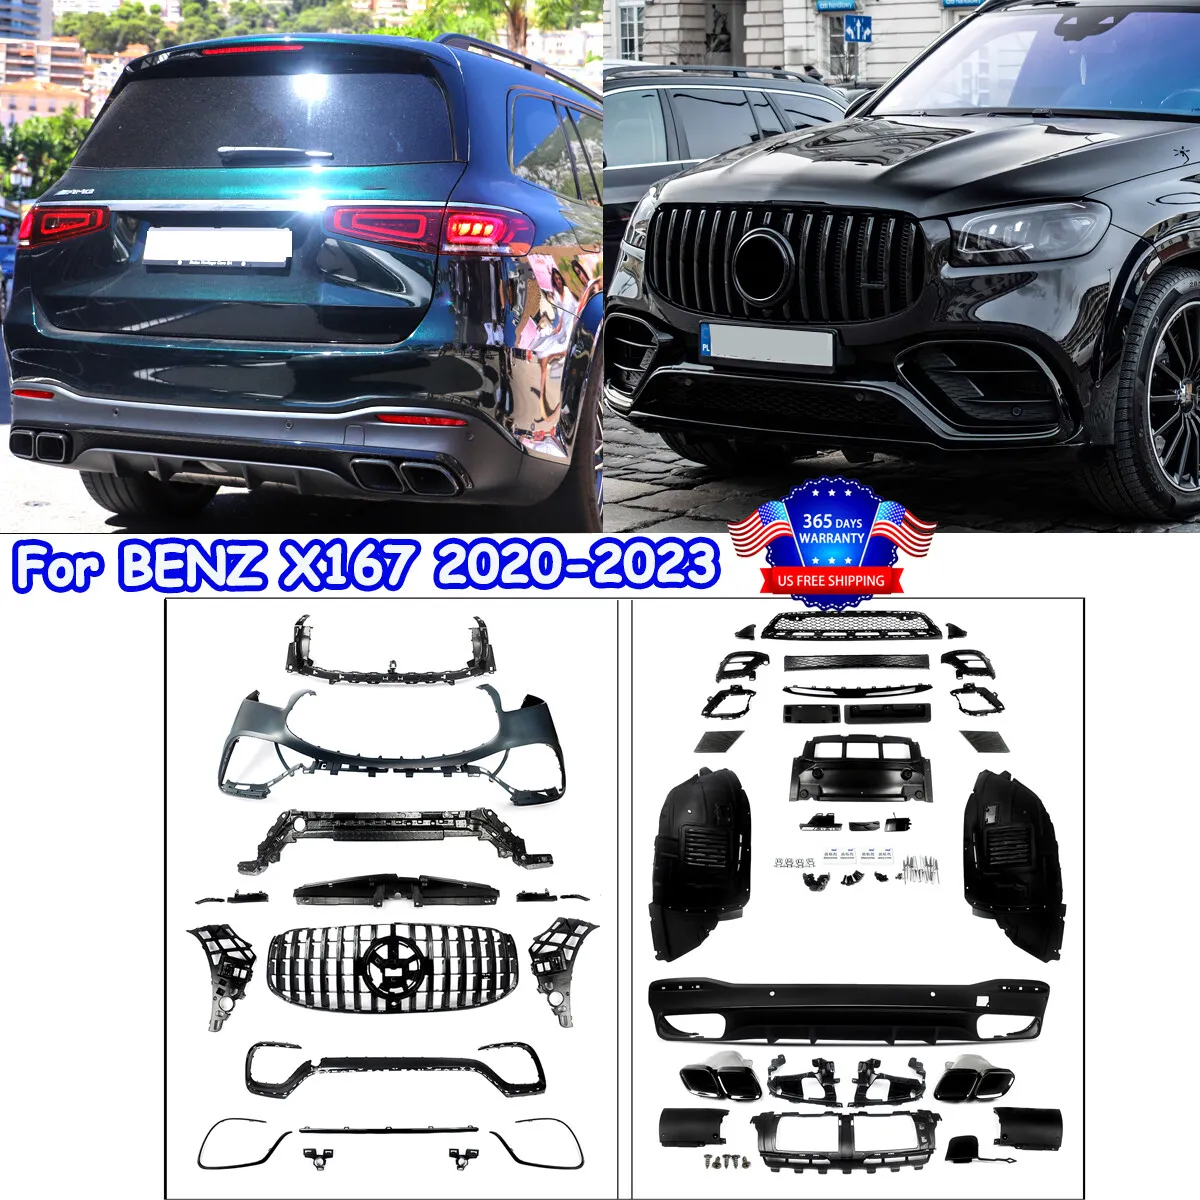 For MERCEDES BENZ GLS X167 GLS63 AMG 2020-2023 Front Grille+Rear Bumper  Body Kit